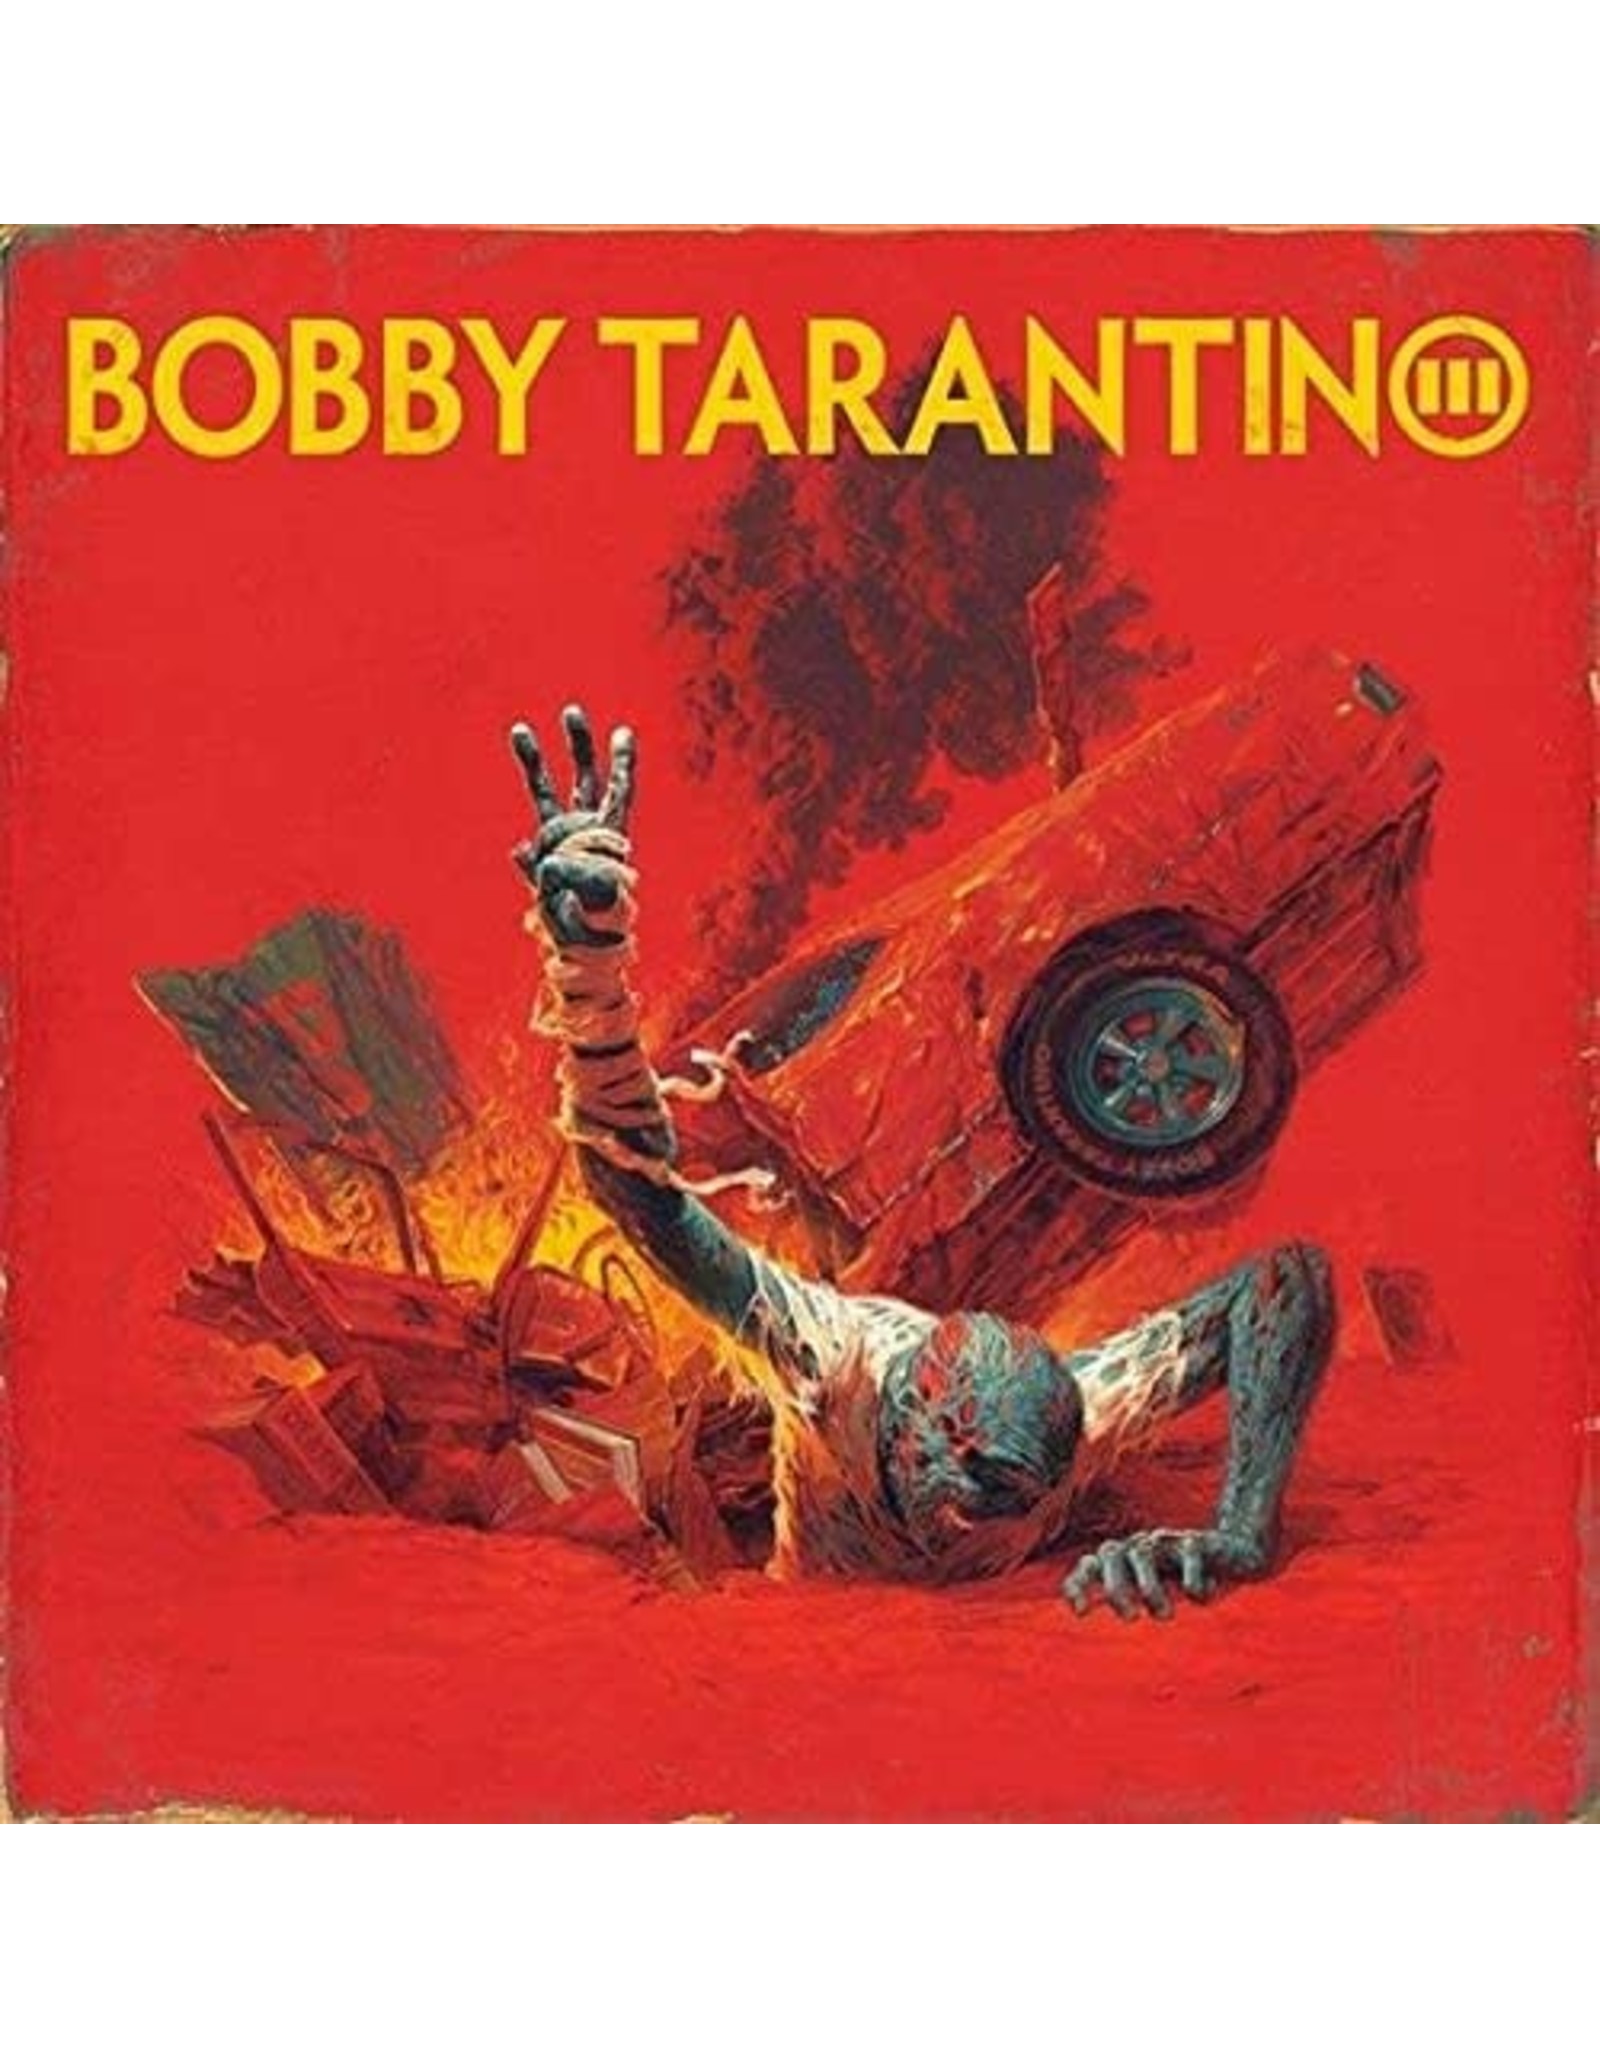 Logic - Bobby Tarantino III CD